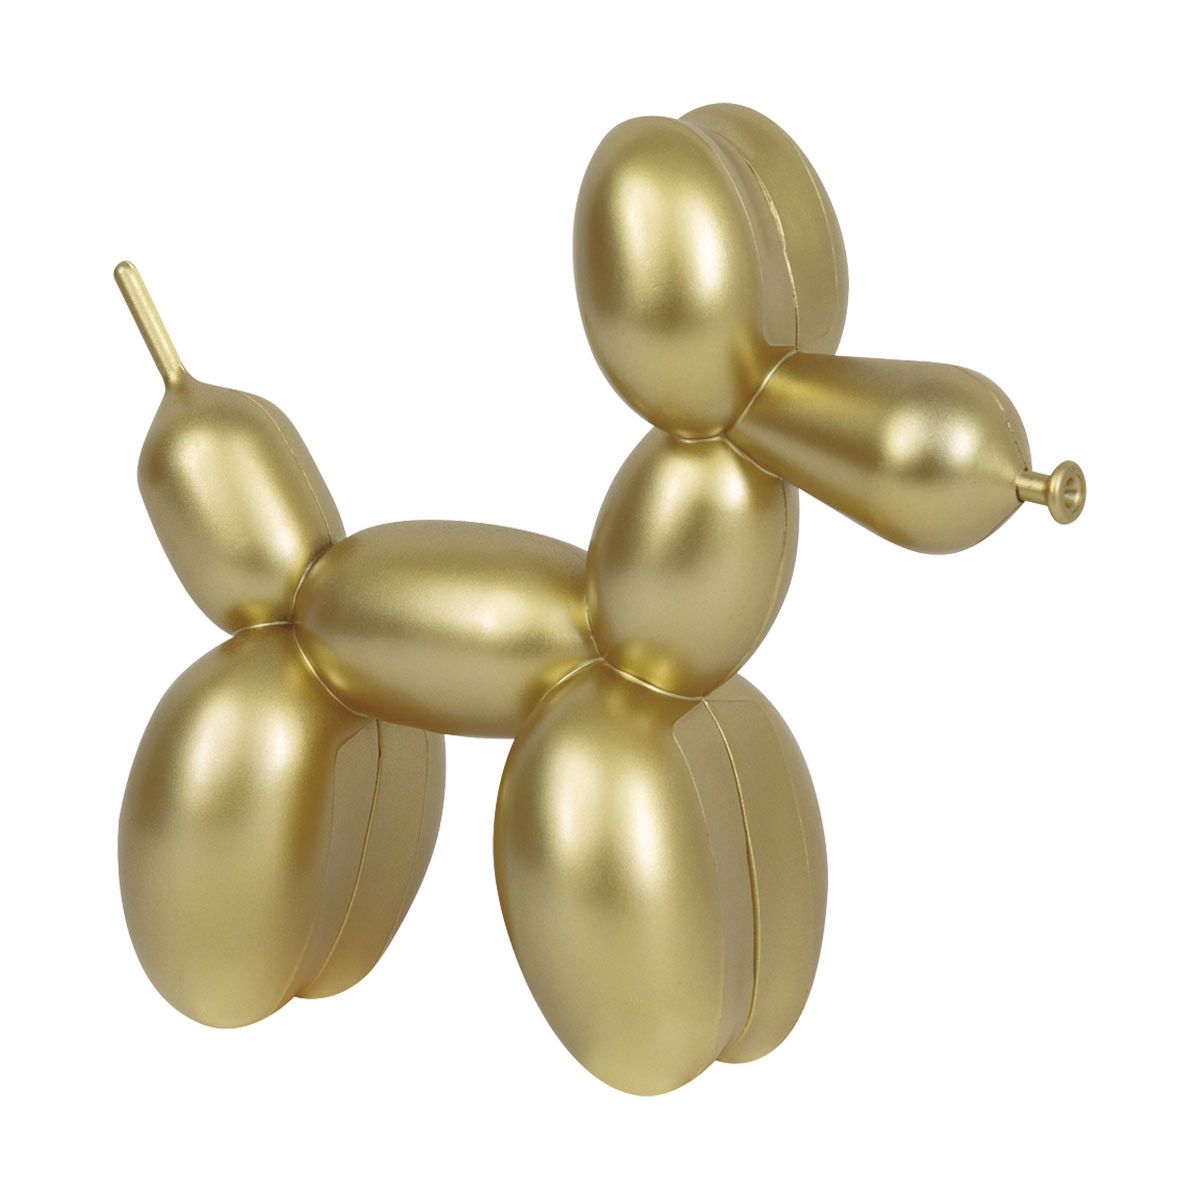 Beistle Metallic Wrapped Party Balloon Weight - silver